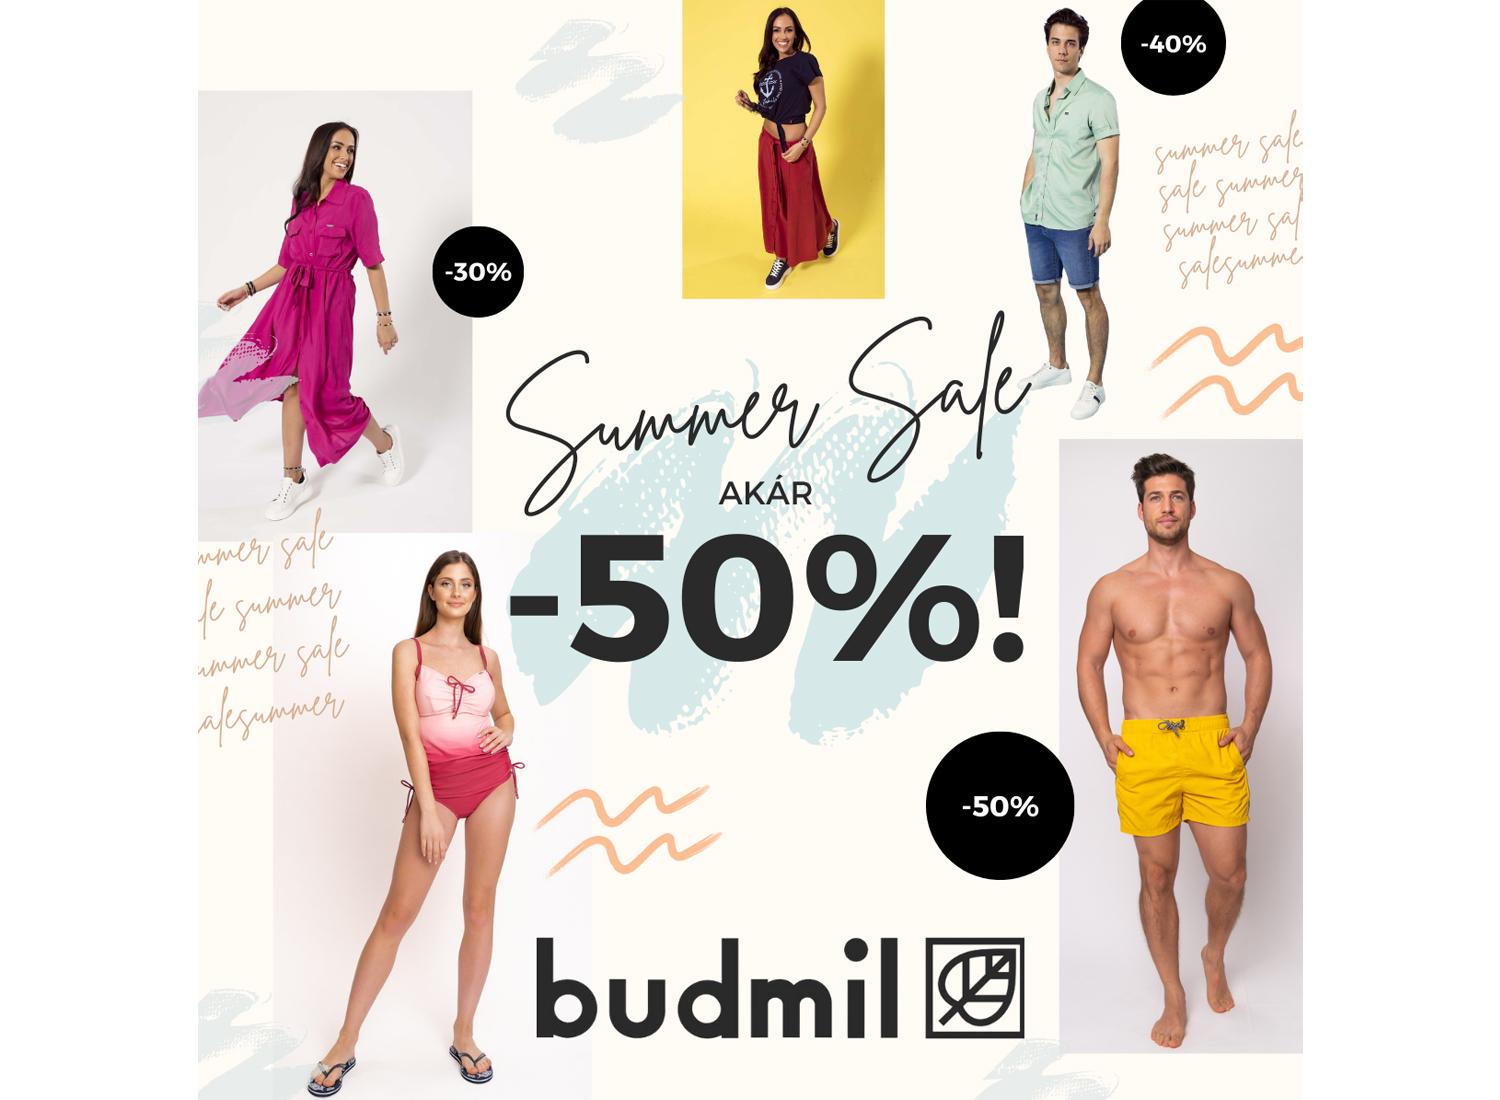 Budmil Summer Sale a Savoya Parkban